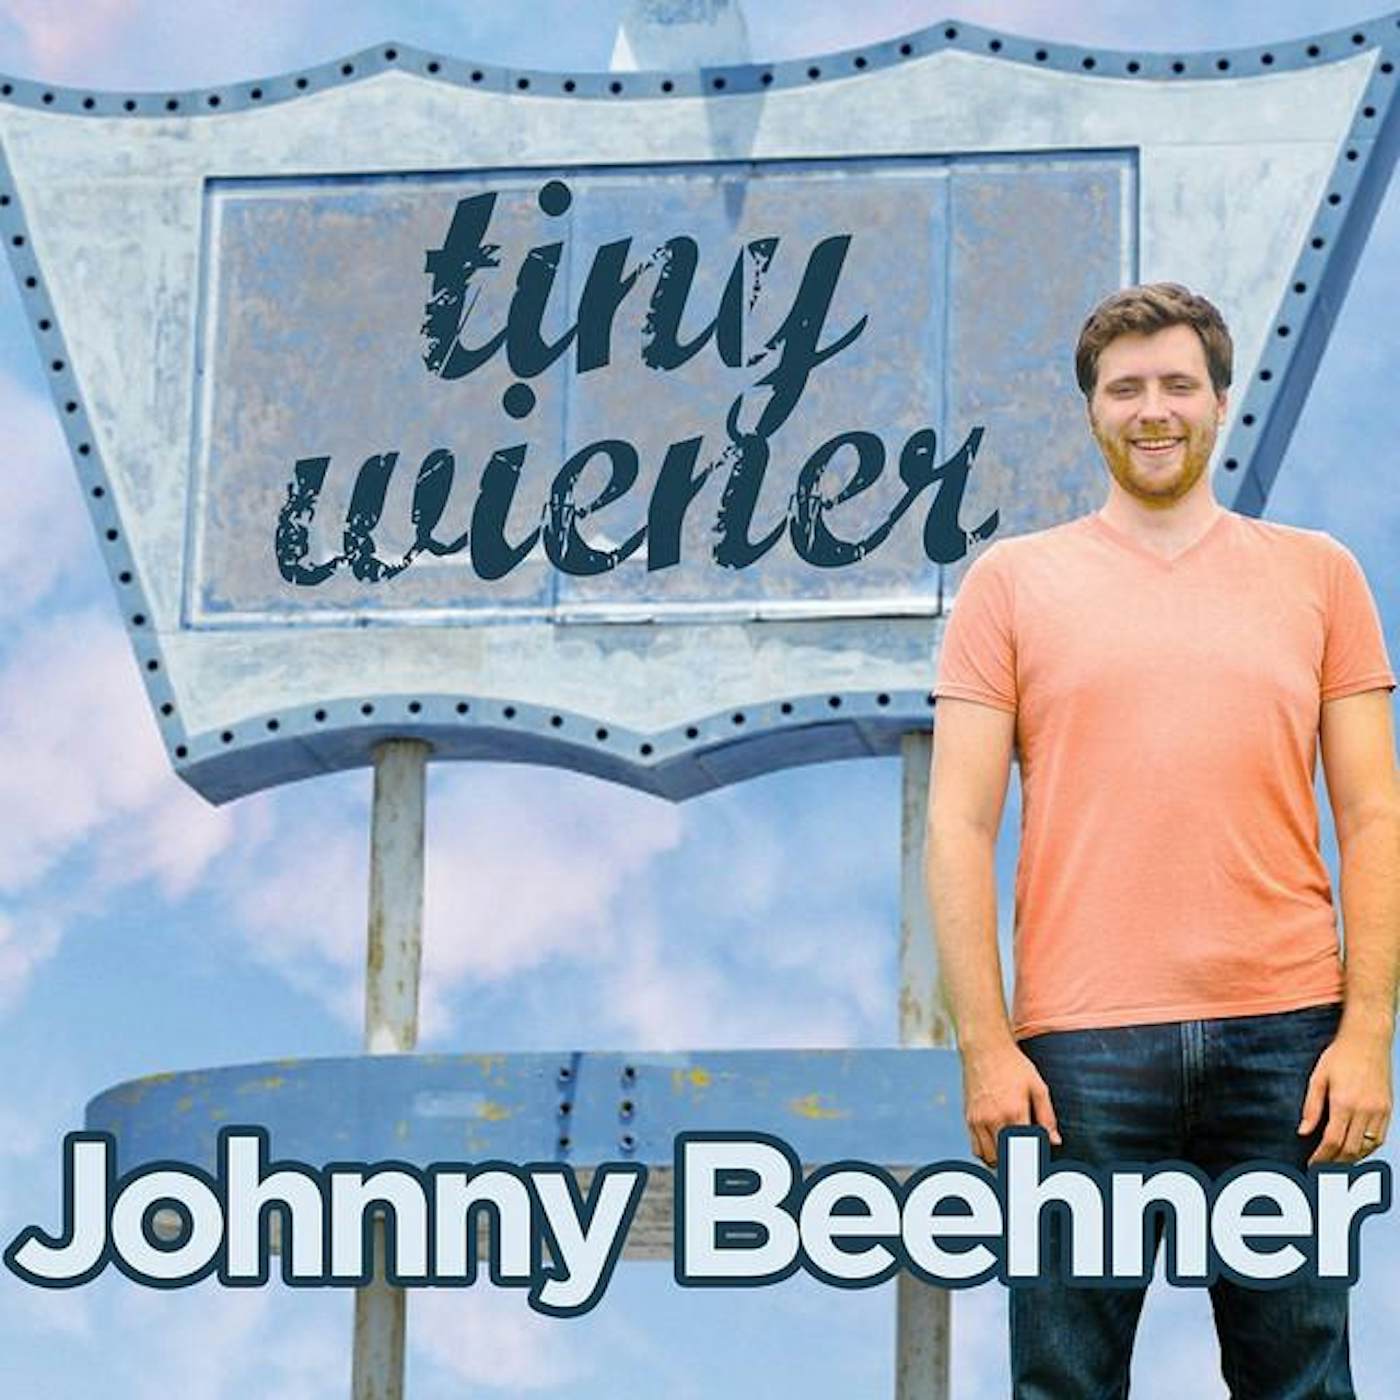 Johnny Beehner